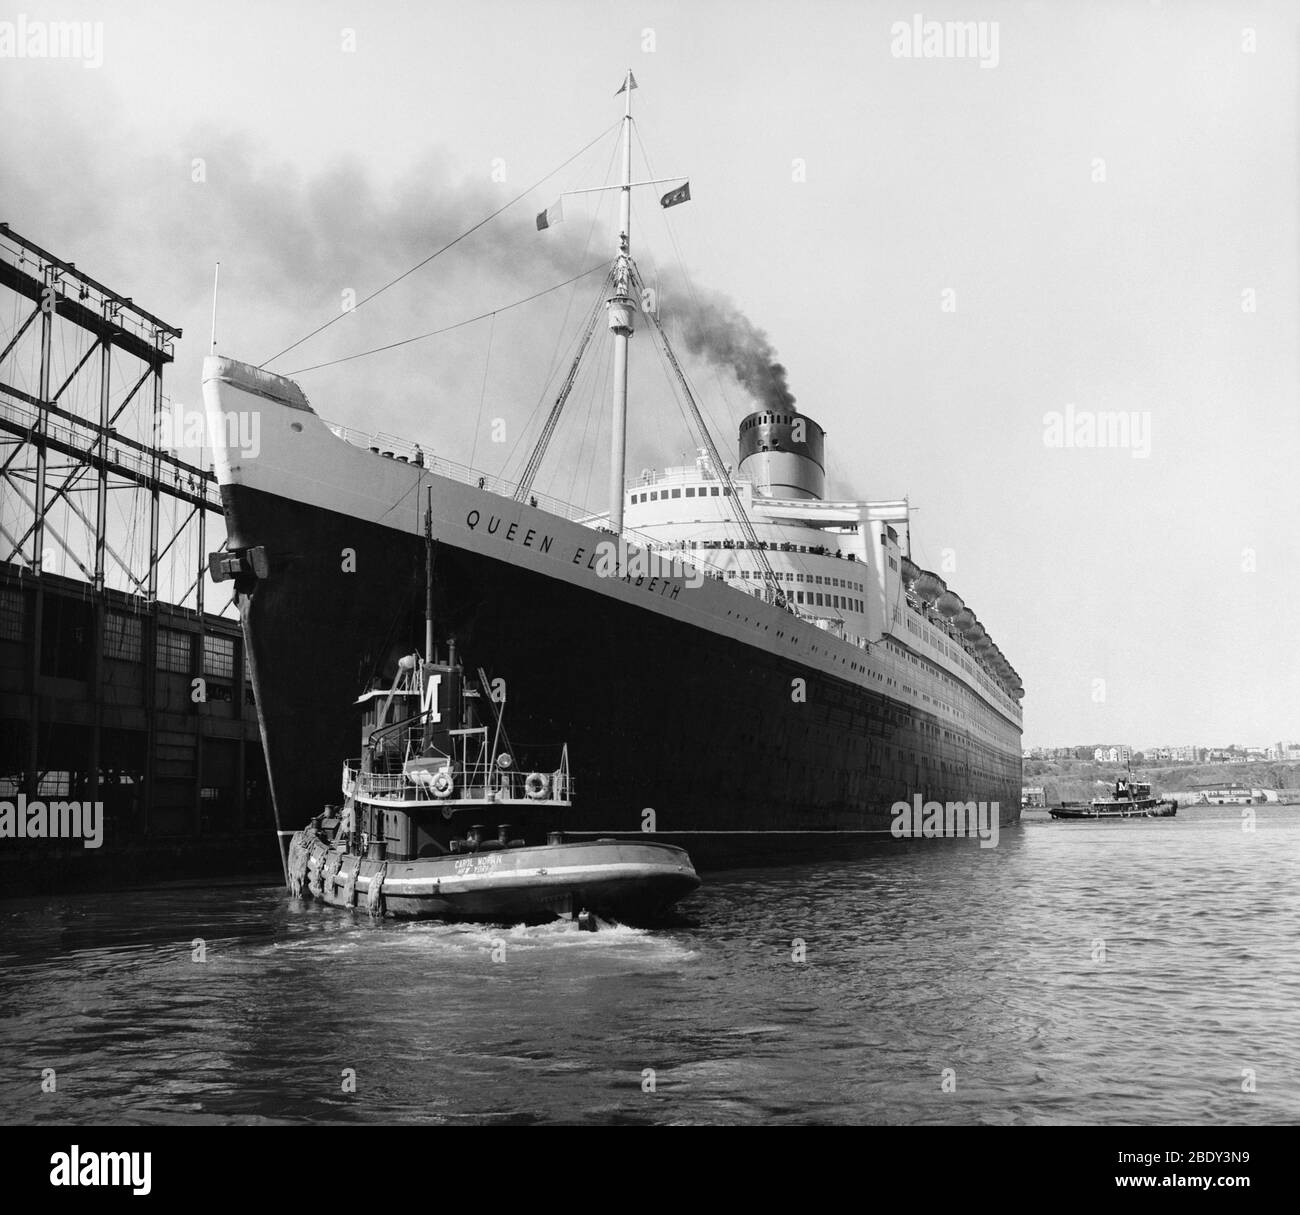 RMS Queen Elizabeth Stock Photo